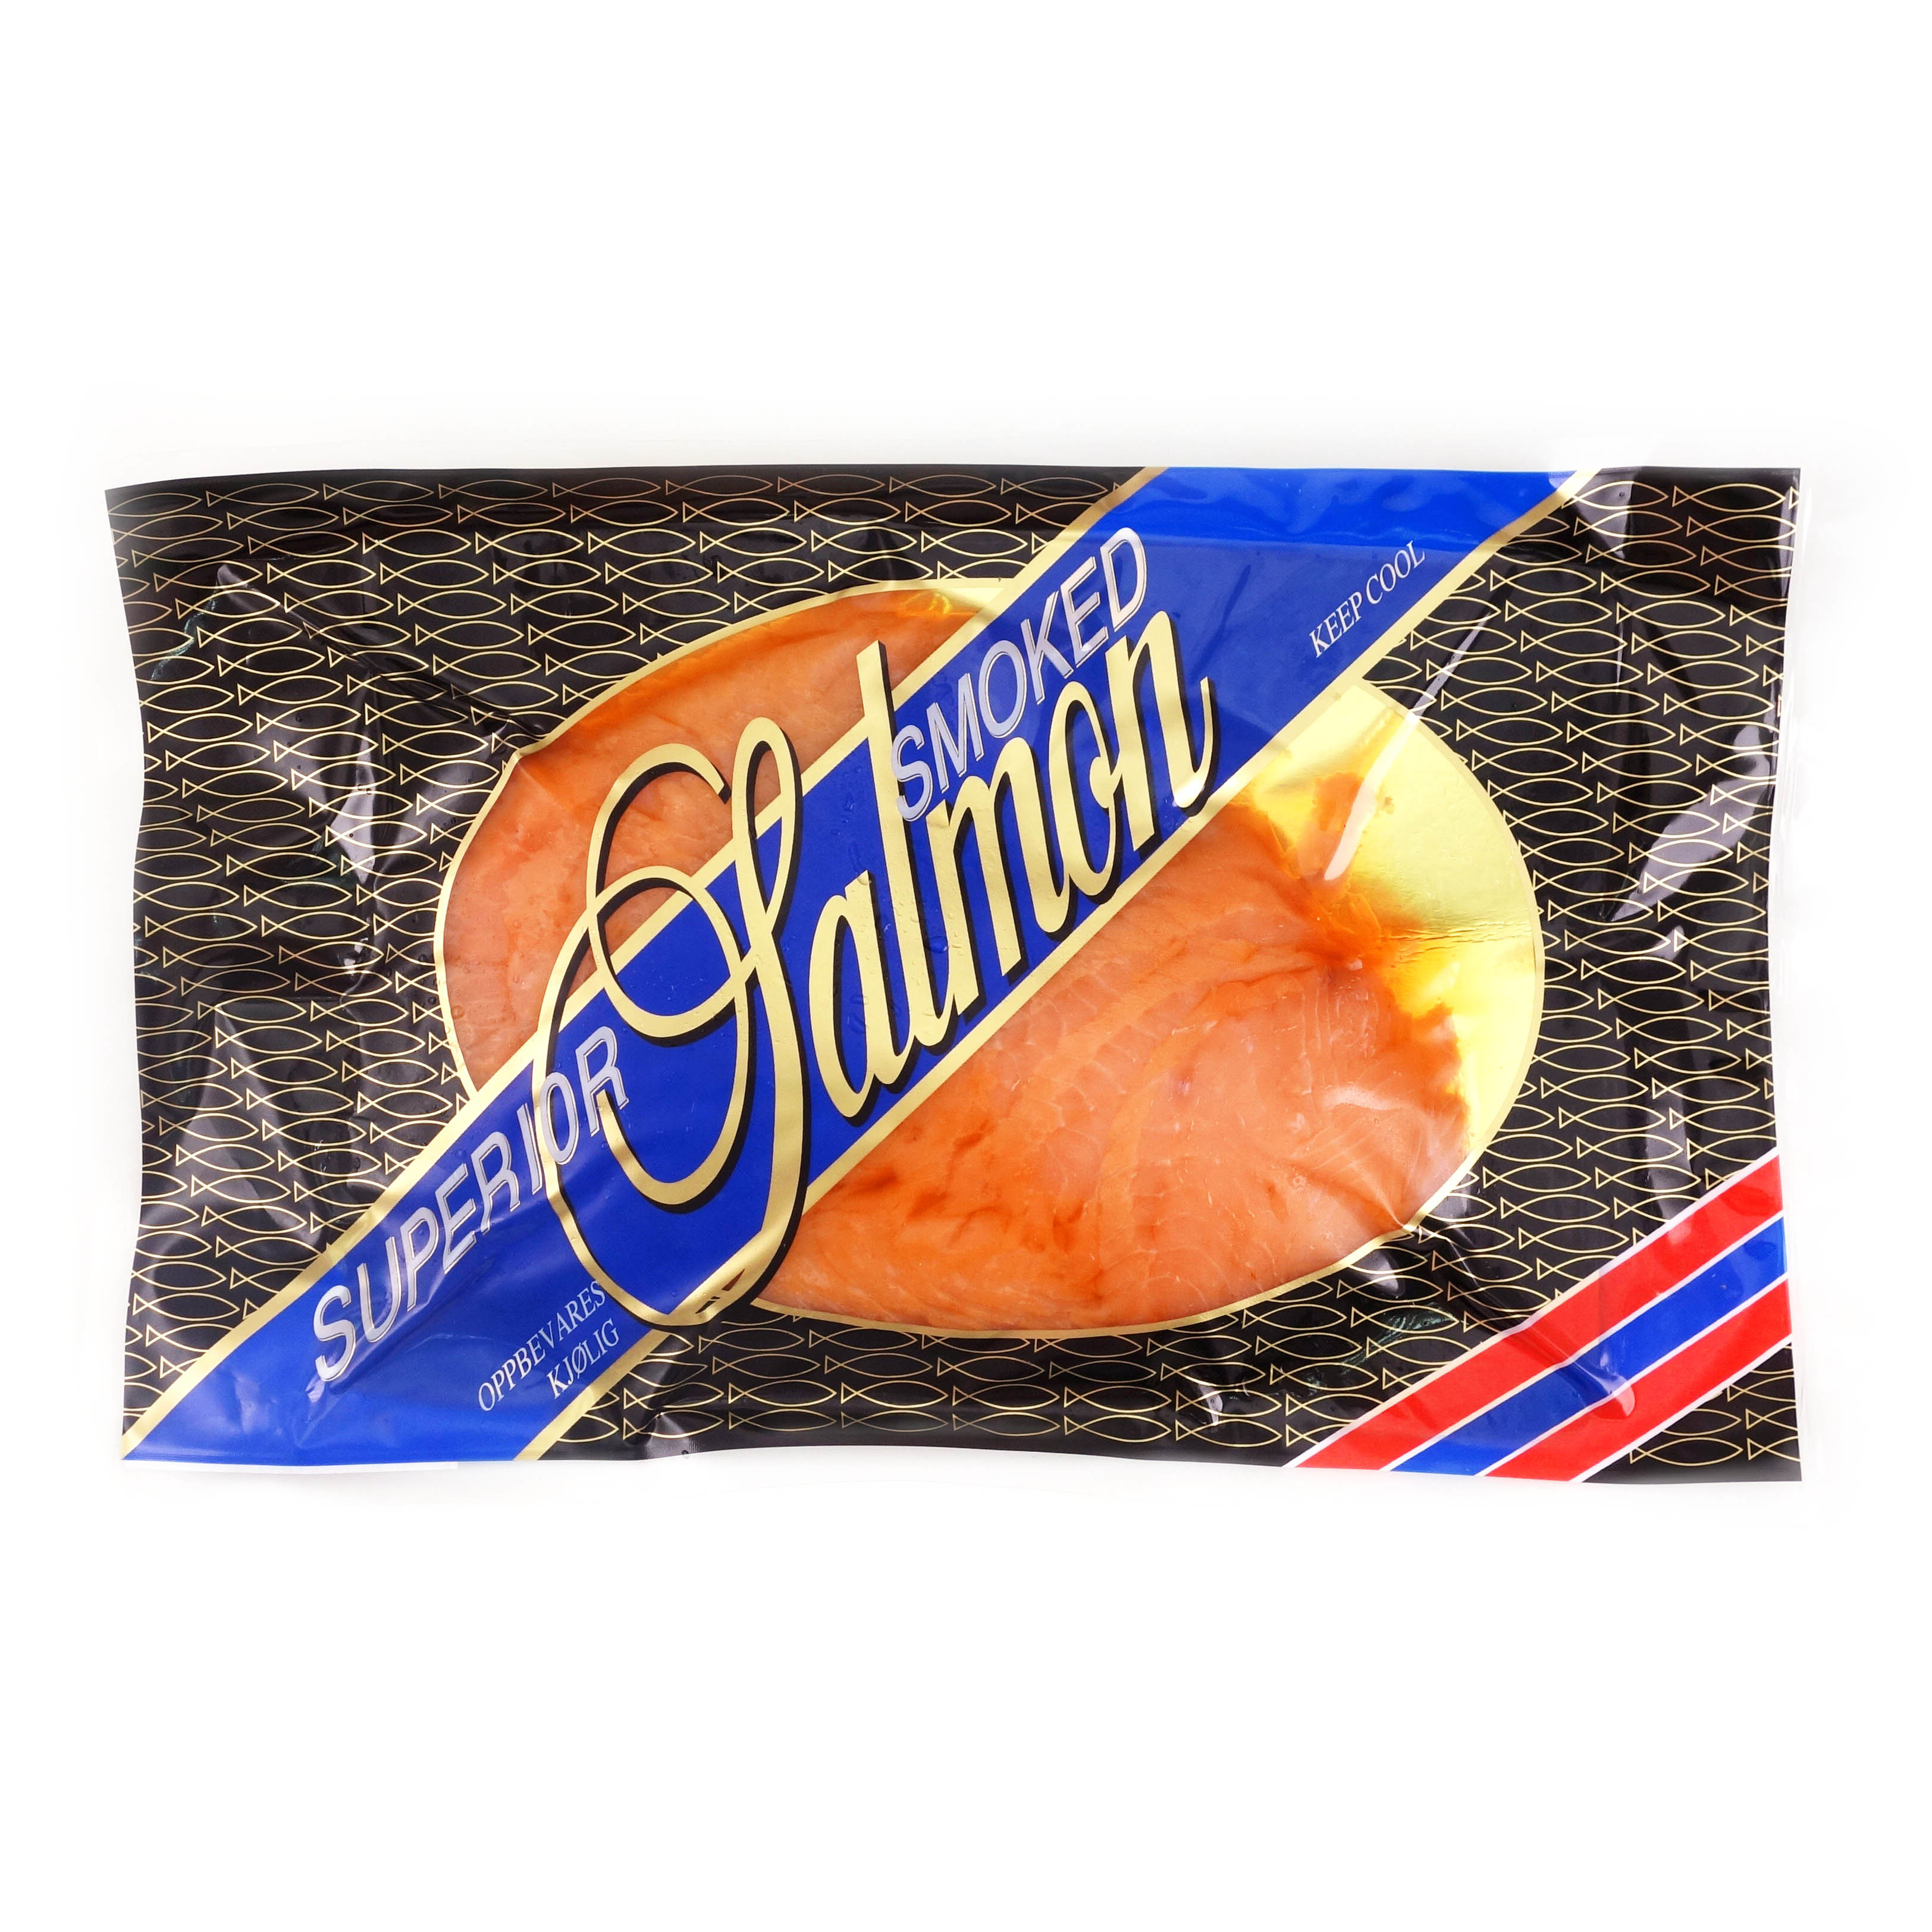 Smoked Atlantic Sliced Salmon 500g - Norway*